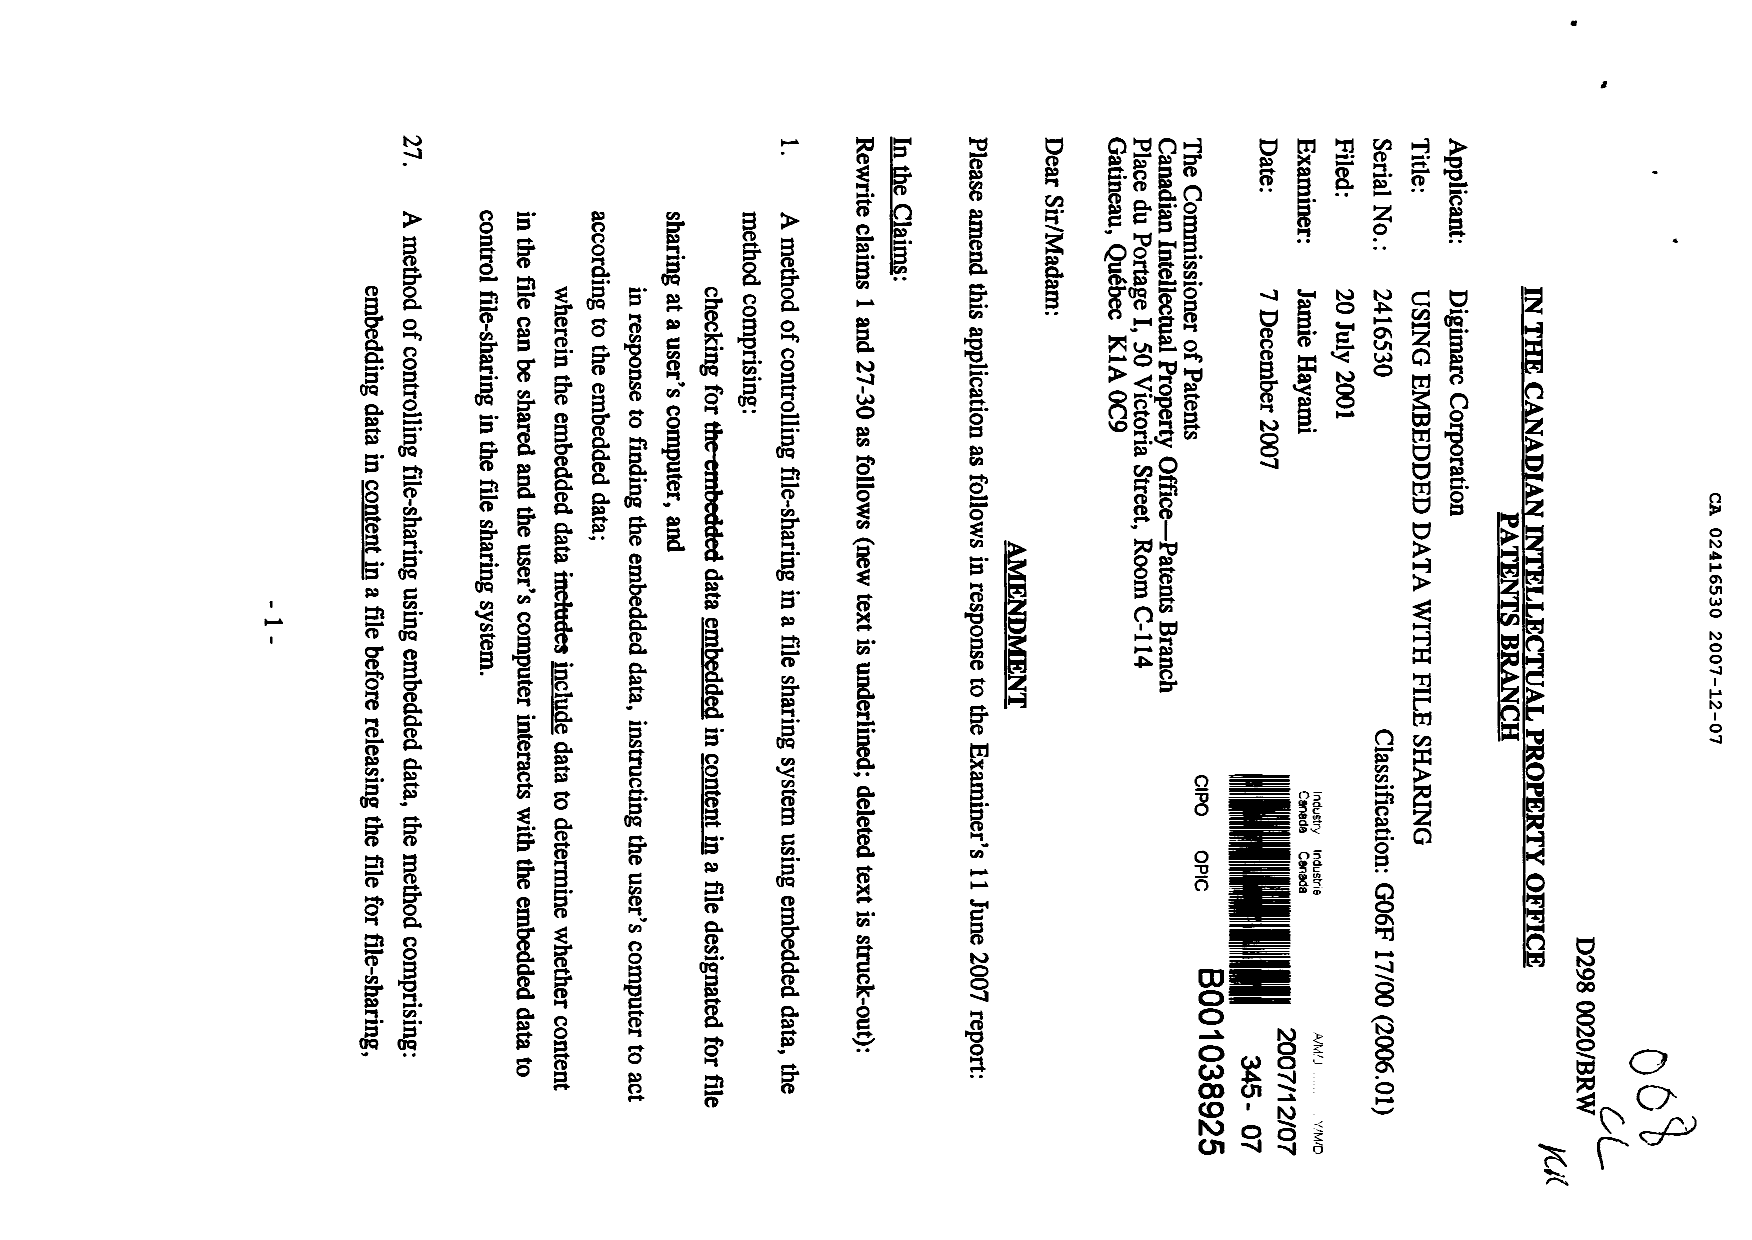 Canadian Patent Document 2416530. Prosecution-Amendment 20071207. Image 1 of 8